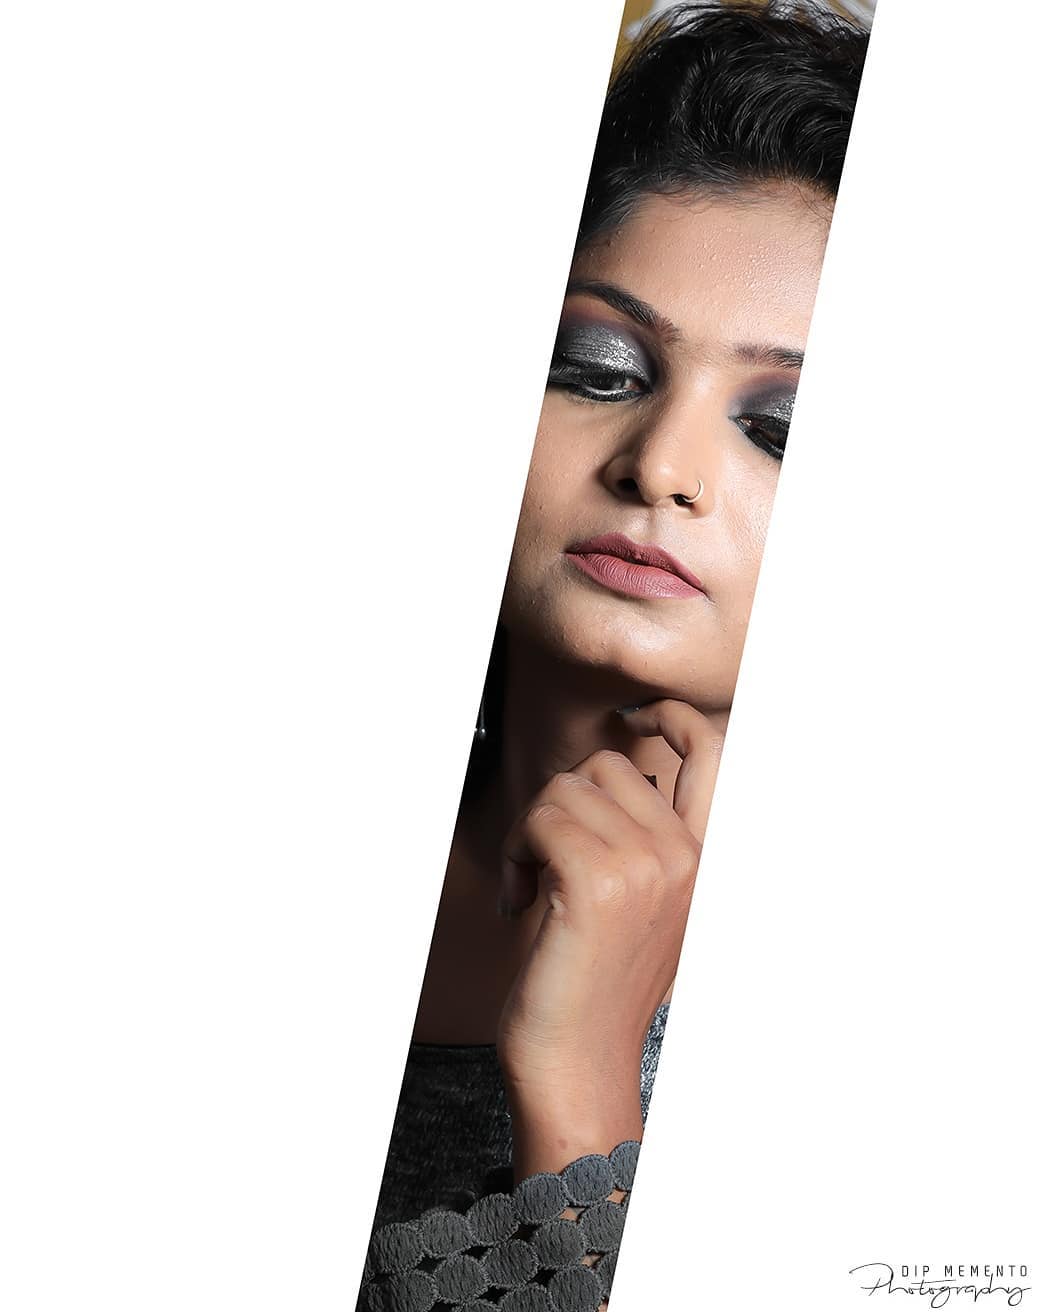 MUA : @dishabeautysaloonacademynikol
Shoot by : @dip_memento_photography
Face: @divyagoshwami.
.
#portraits #dslrofficial #indianphotographers 
#portraitsindia #canon #colorsofindia
#photosofindia 
#fashion
#photographersofindia
#portraitsindia #fashionblogger #dipmementophotography
#makeupartist #photography #portraitvision #portraitmood #indianportraits #colorsofindia #portraitphotography #ahmedabad #indianpictures 
#portraitmood #portraits_india #bokehphotography #bongportrait #bokehphotography #yesindia #9924227745 #dipmementophotography #dip_memento_photography